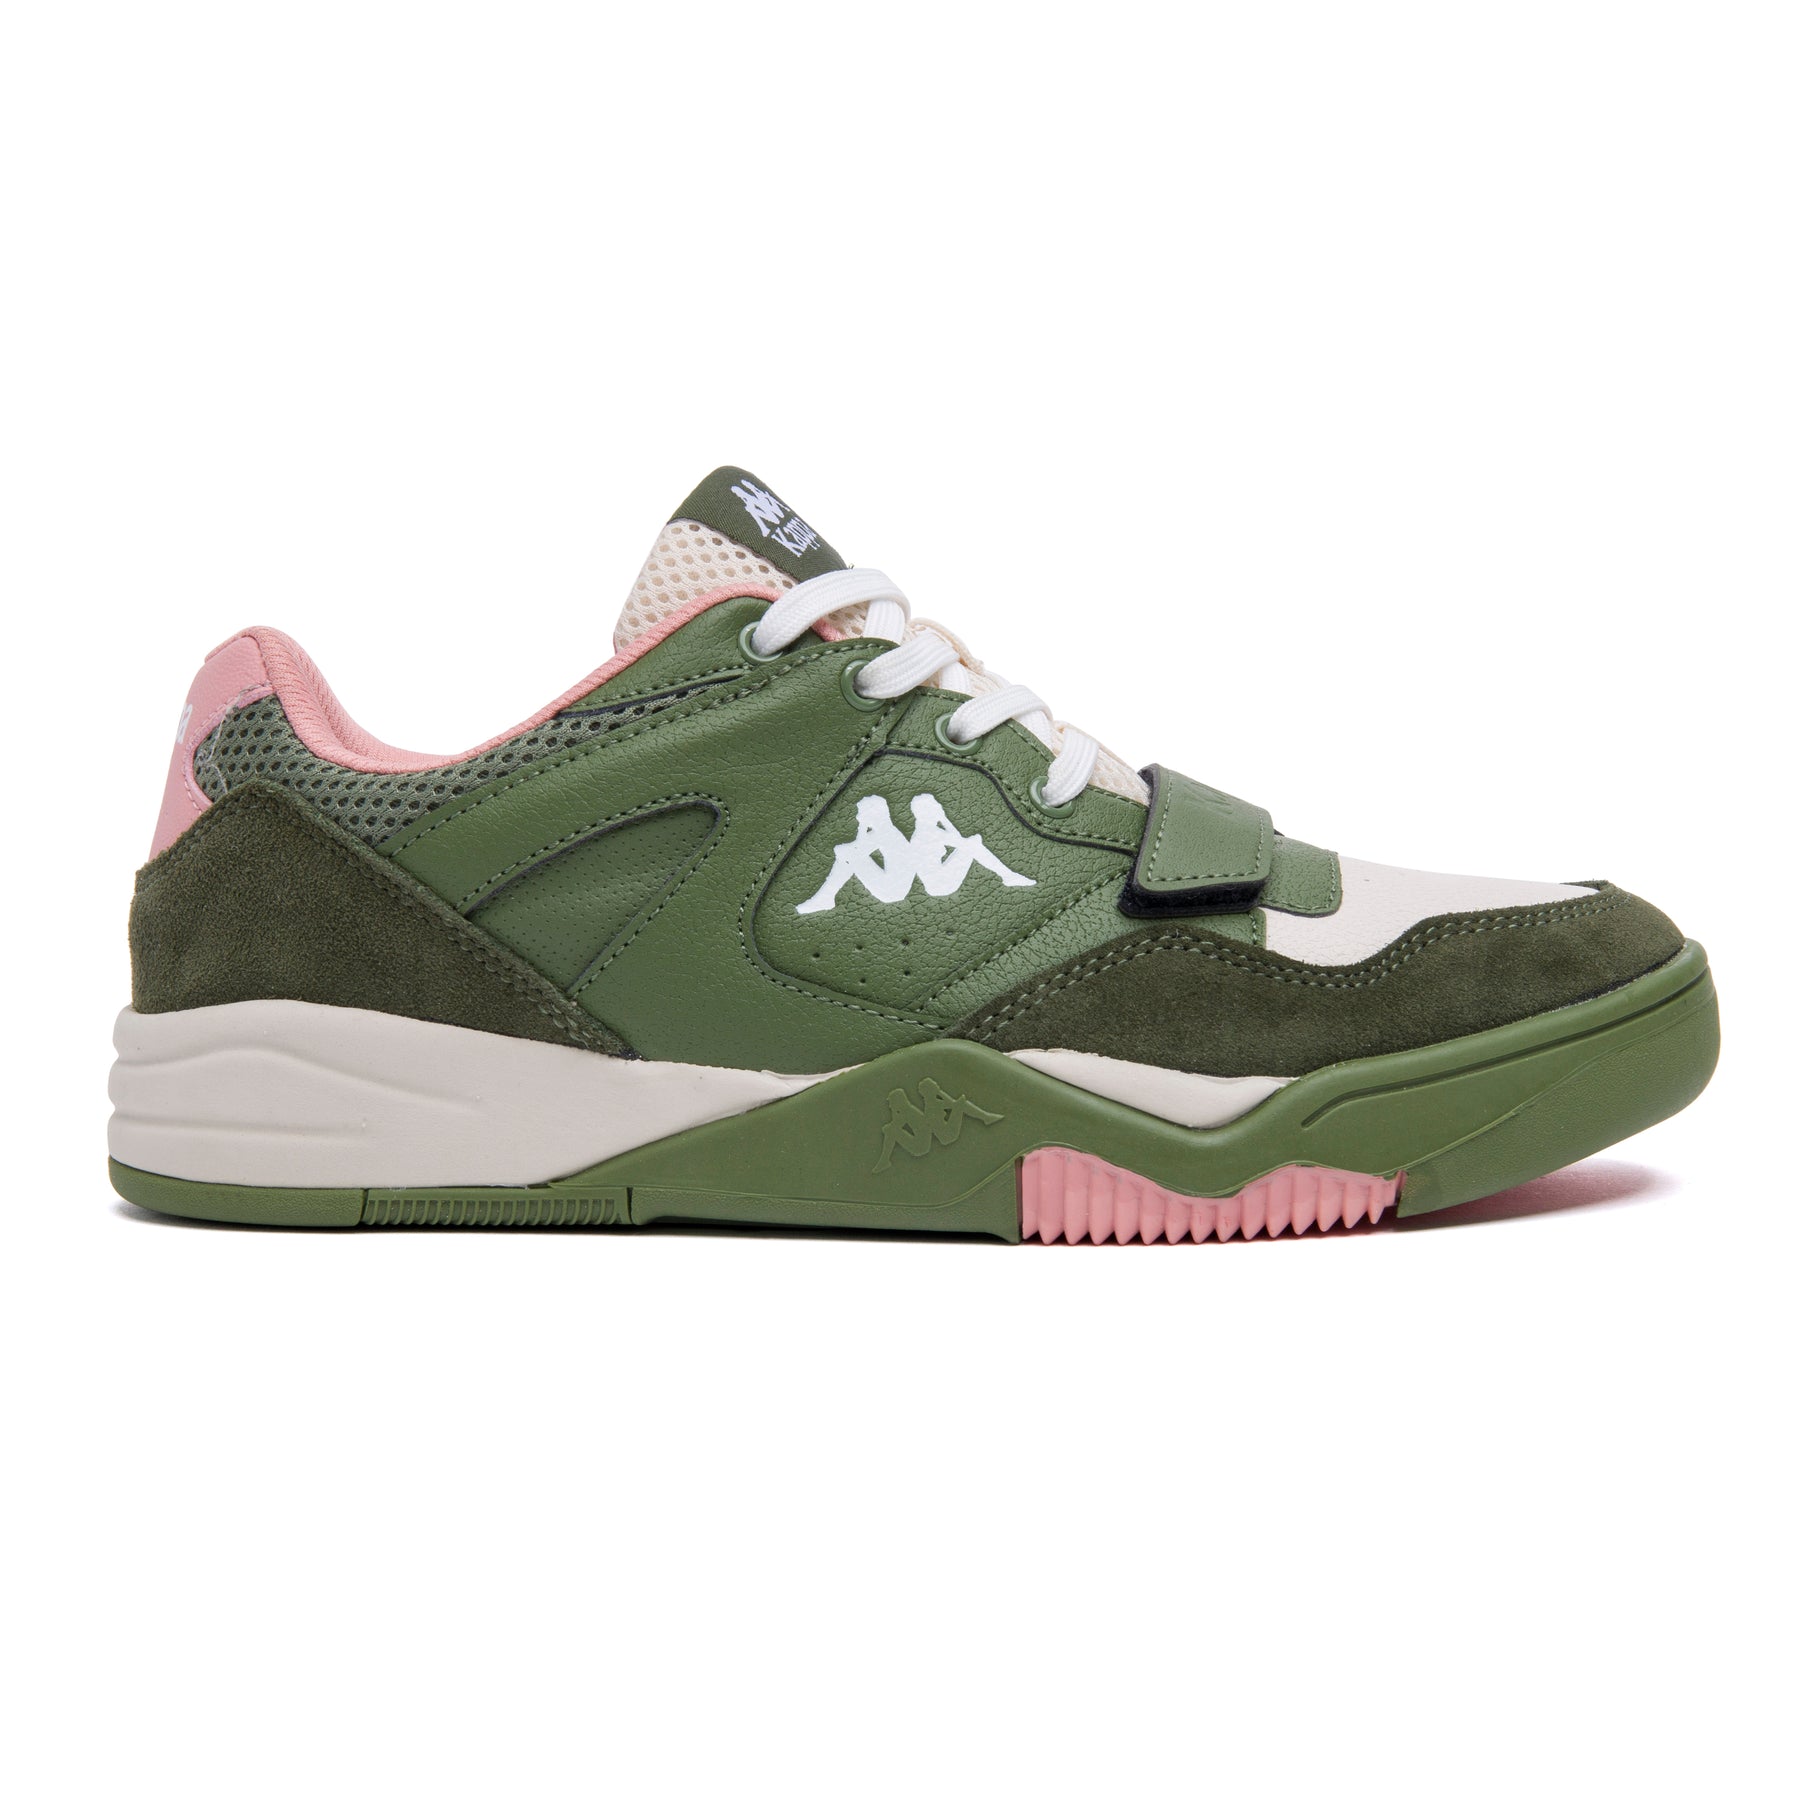 USA Atlanta Kappa Sneakers Authentic – Pink Green Olive - 2